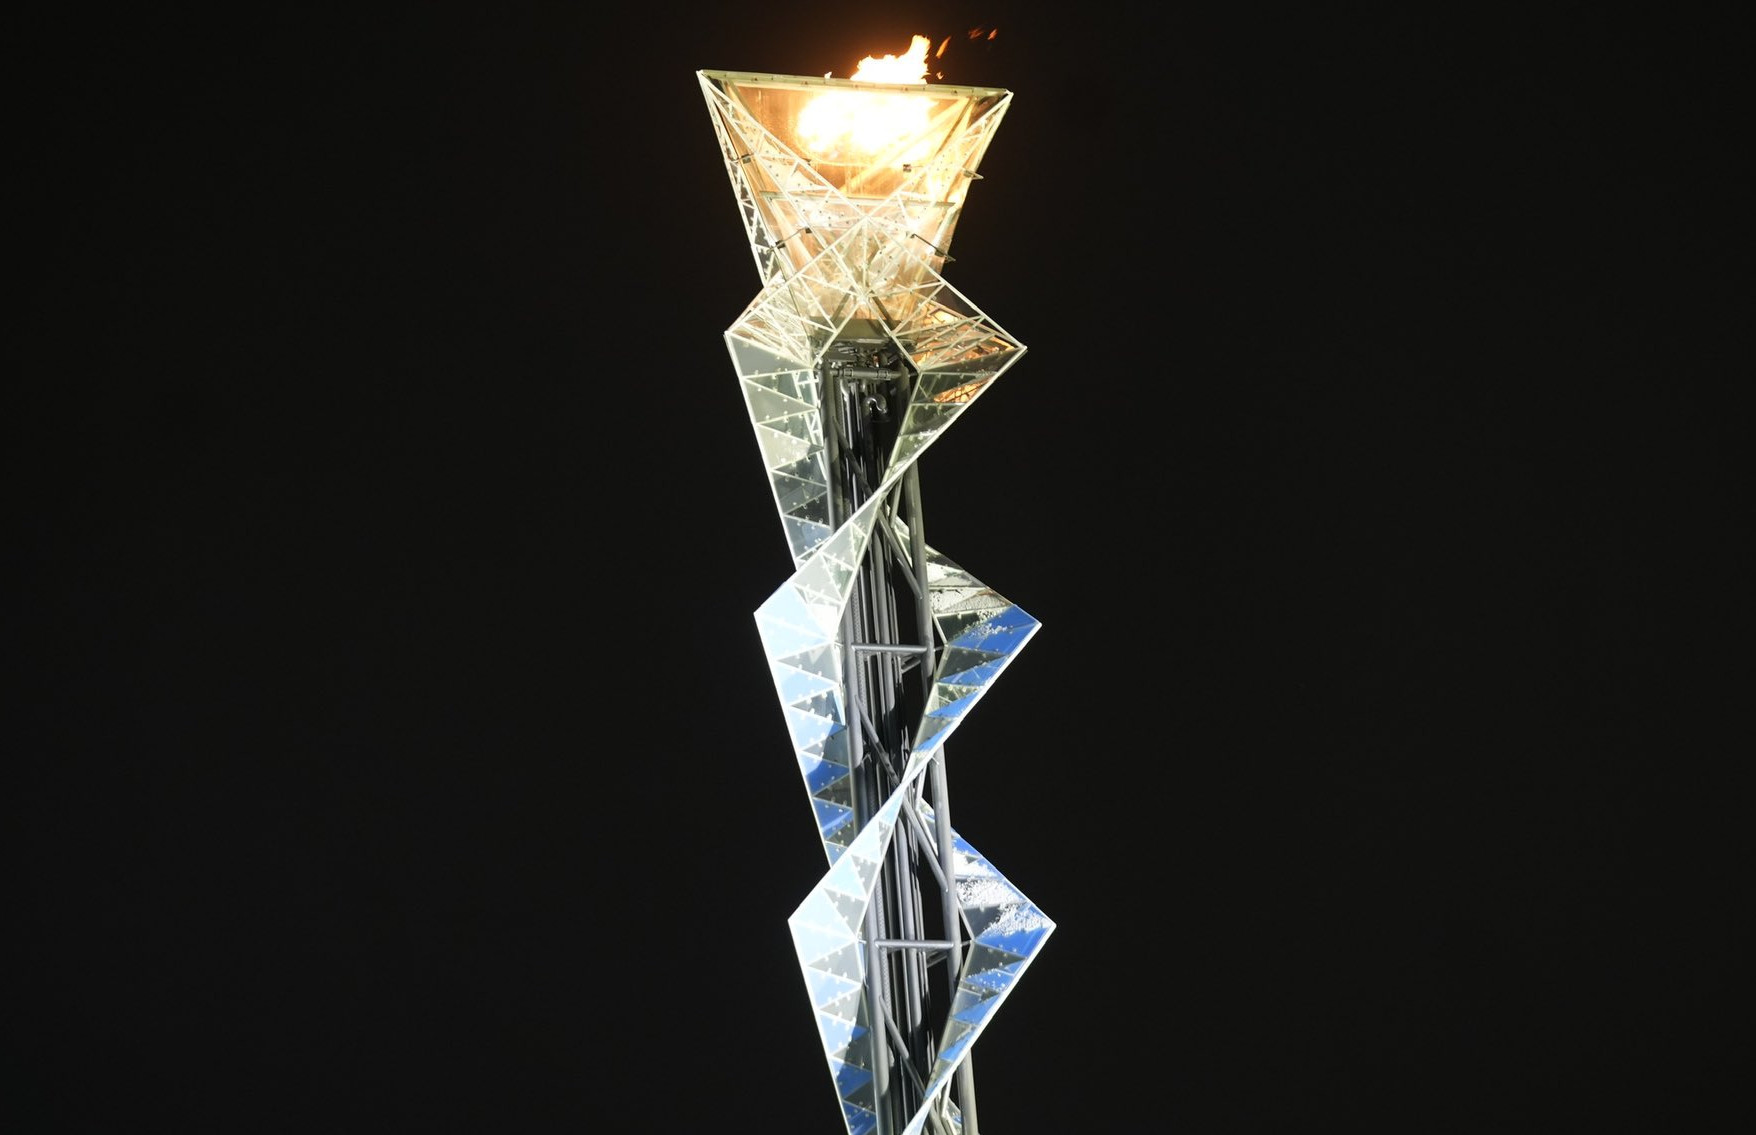 2034 Olympics: Salt Lake City to relight 2002 Winter Games' cauldron. TWITTER